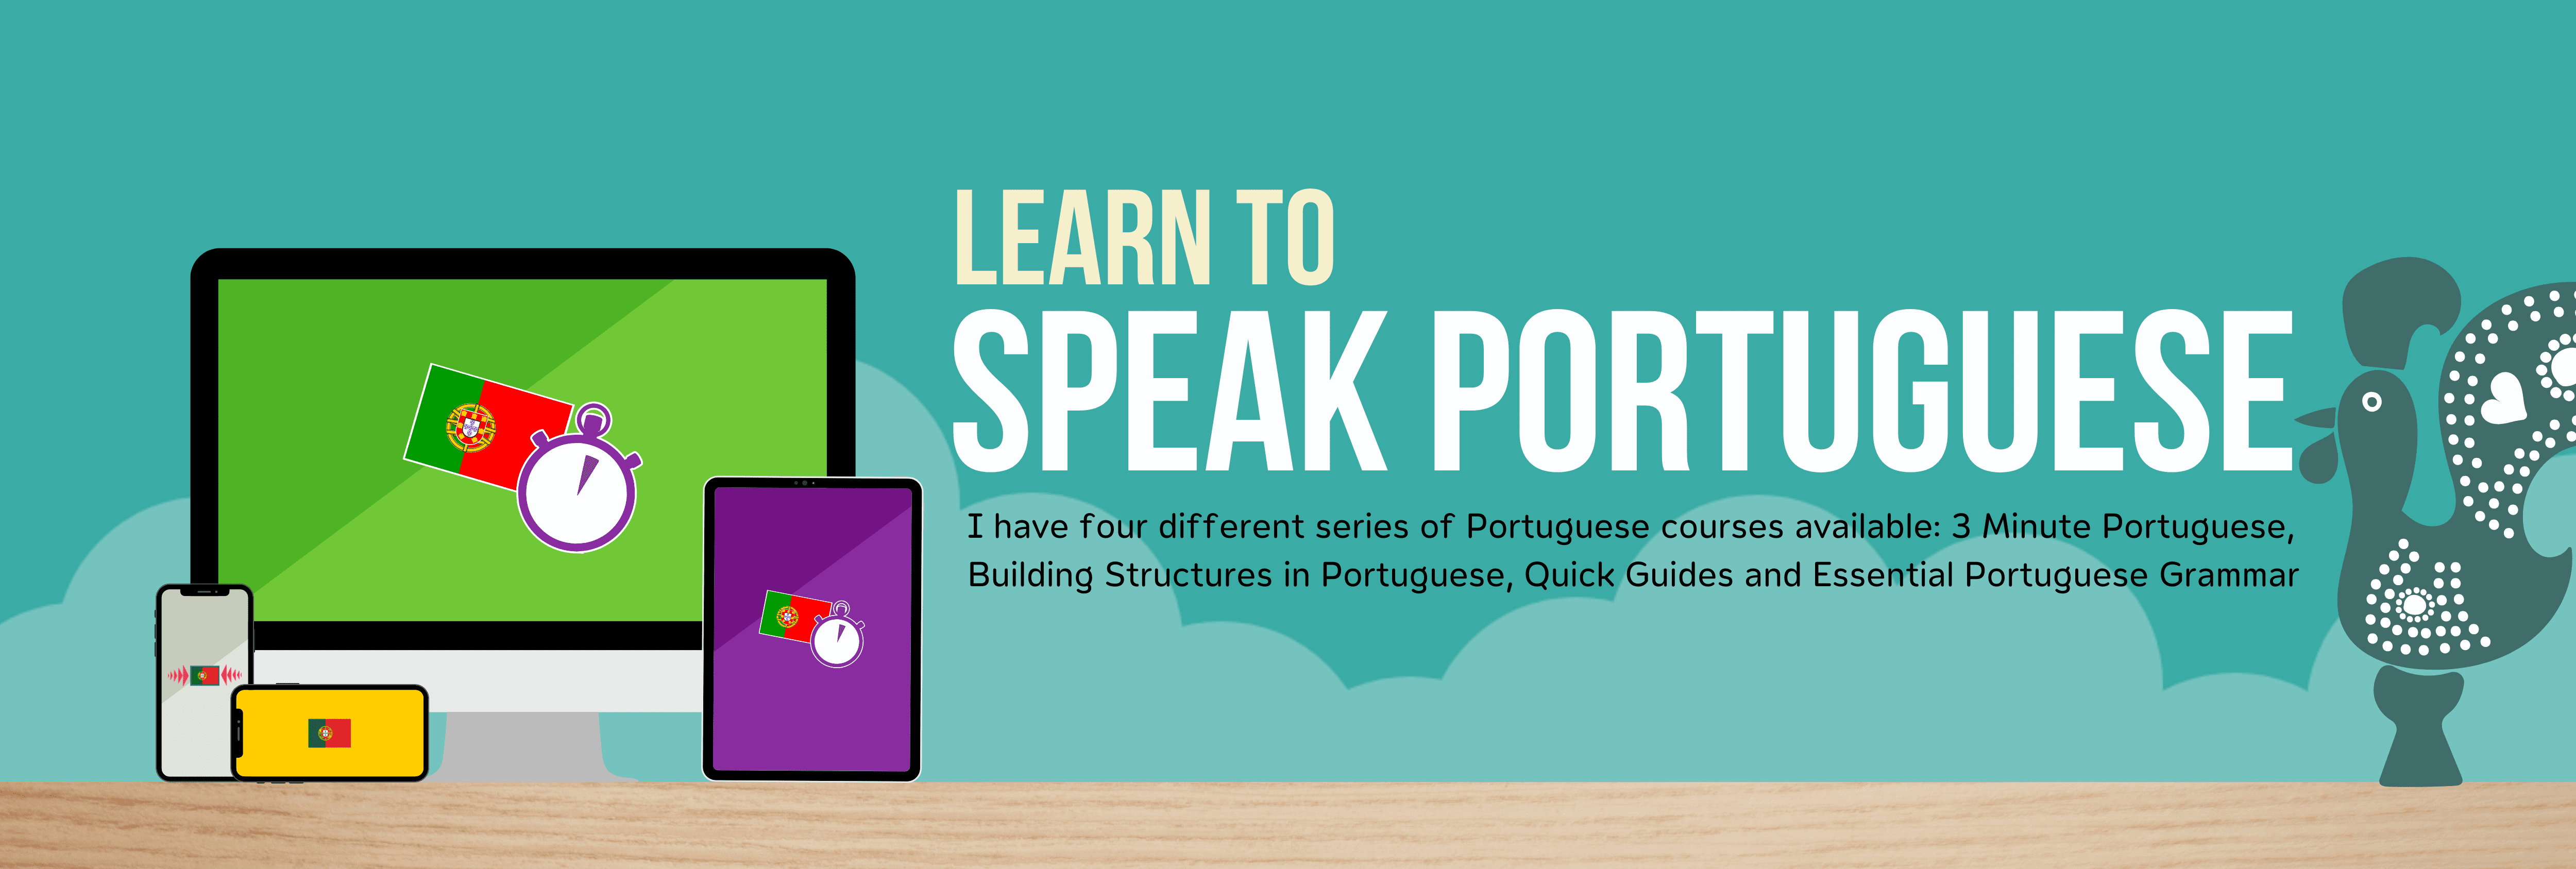 Learn to speak Portuguese